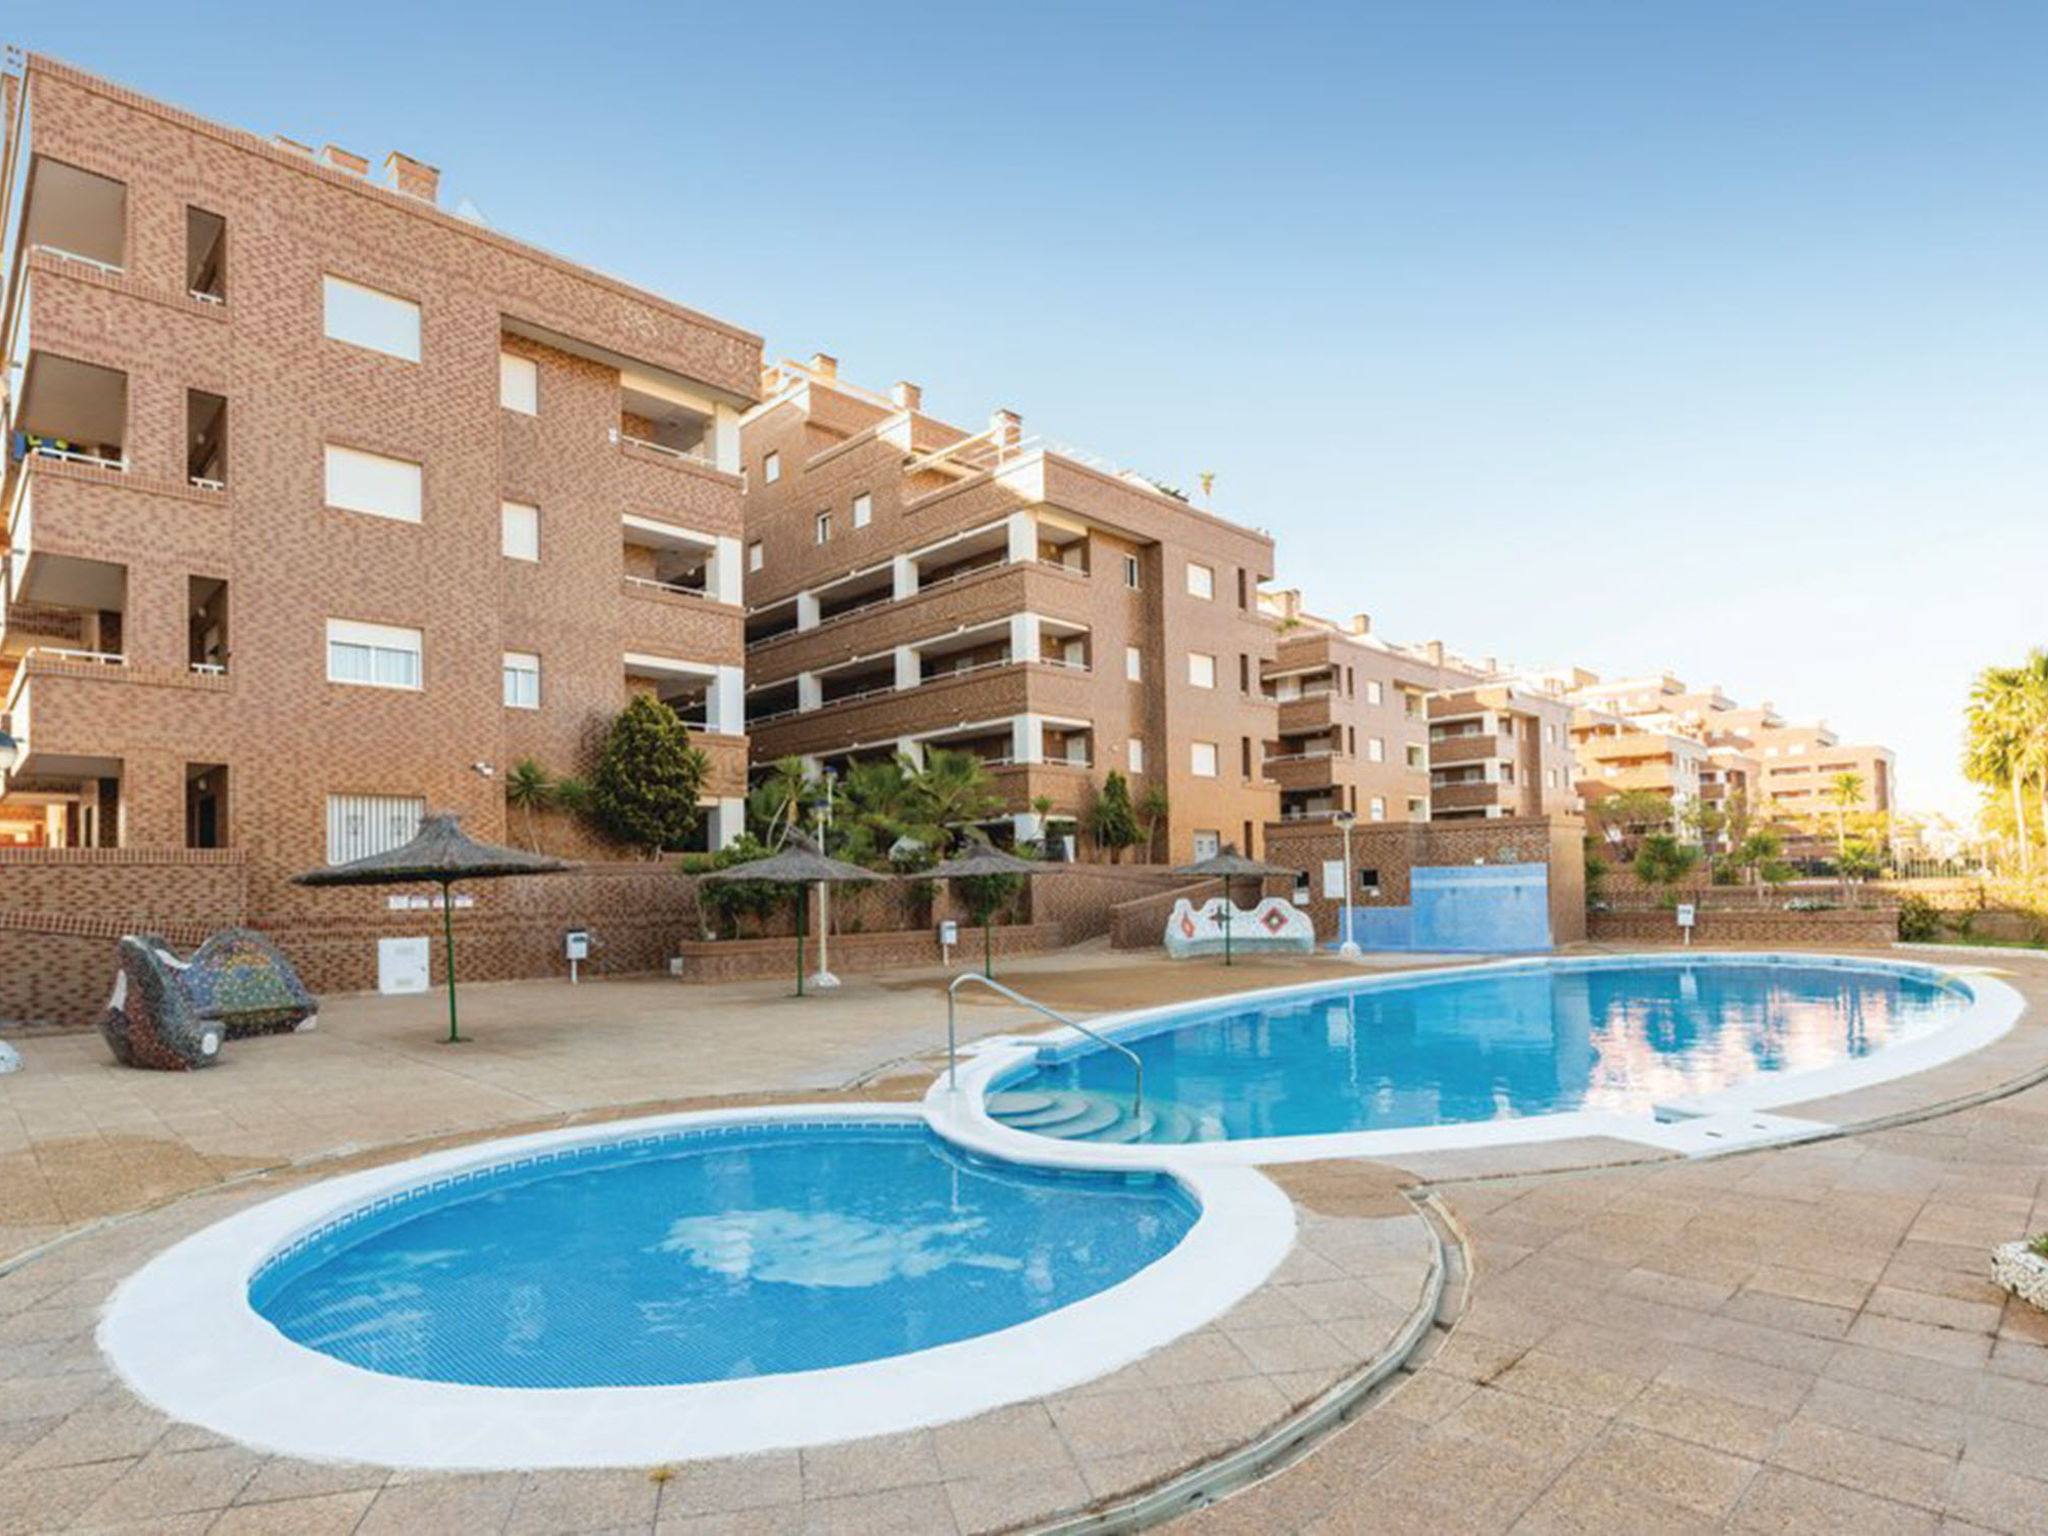 Photo 1 - Appartement de 2 chambres à Oropesa del Mar avec piscine et vues à la mer